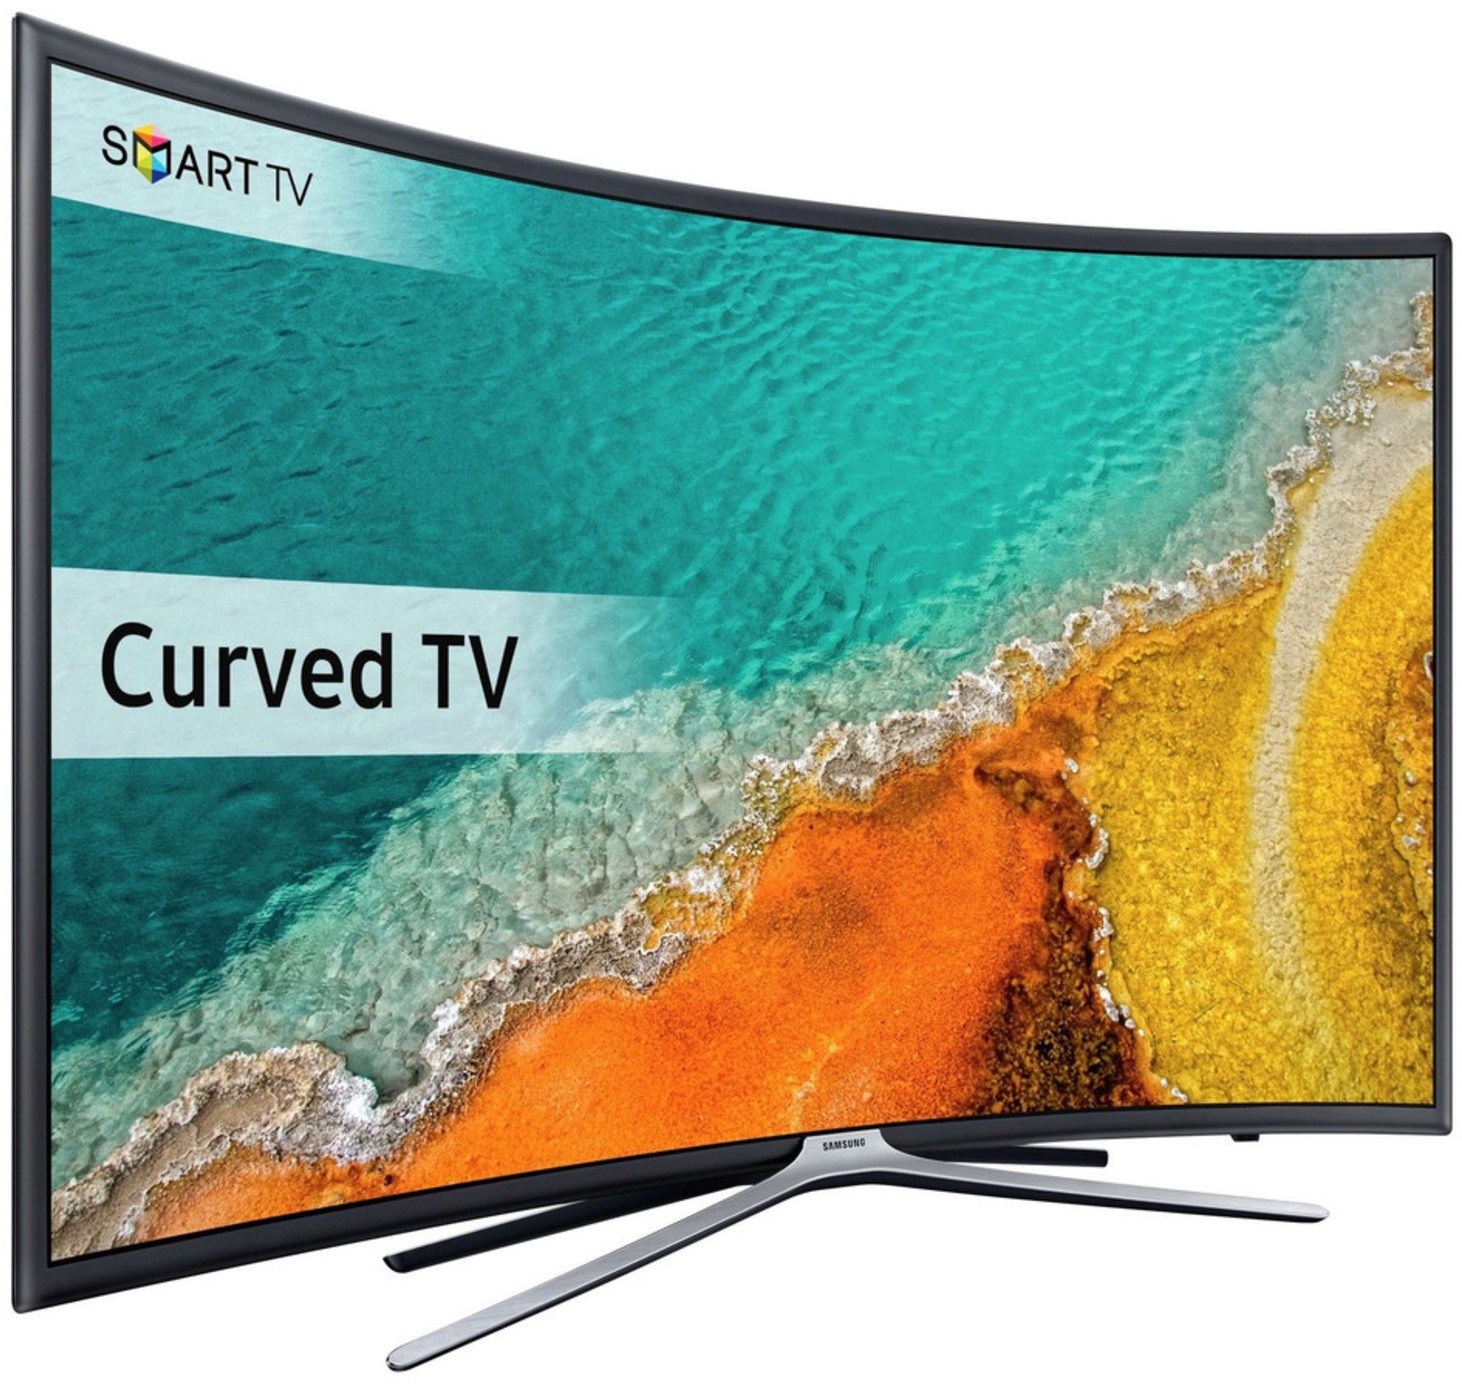 Samsung UE40K6300 40 Zoll Curved Full-HD TV für nur 408,90 Euro inkl. Versand